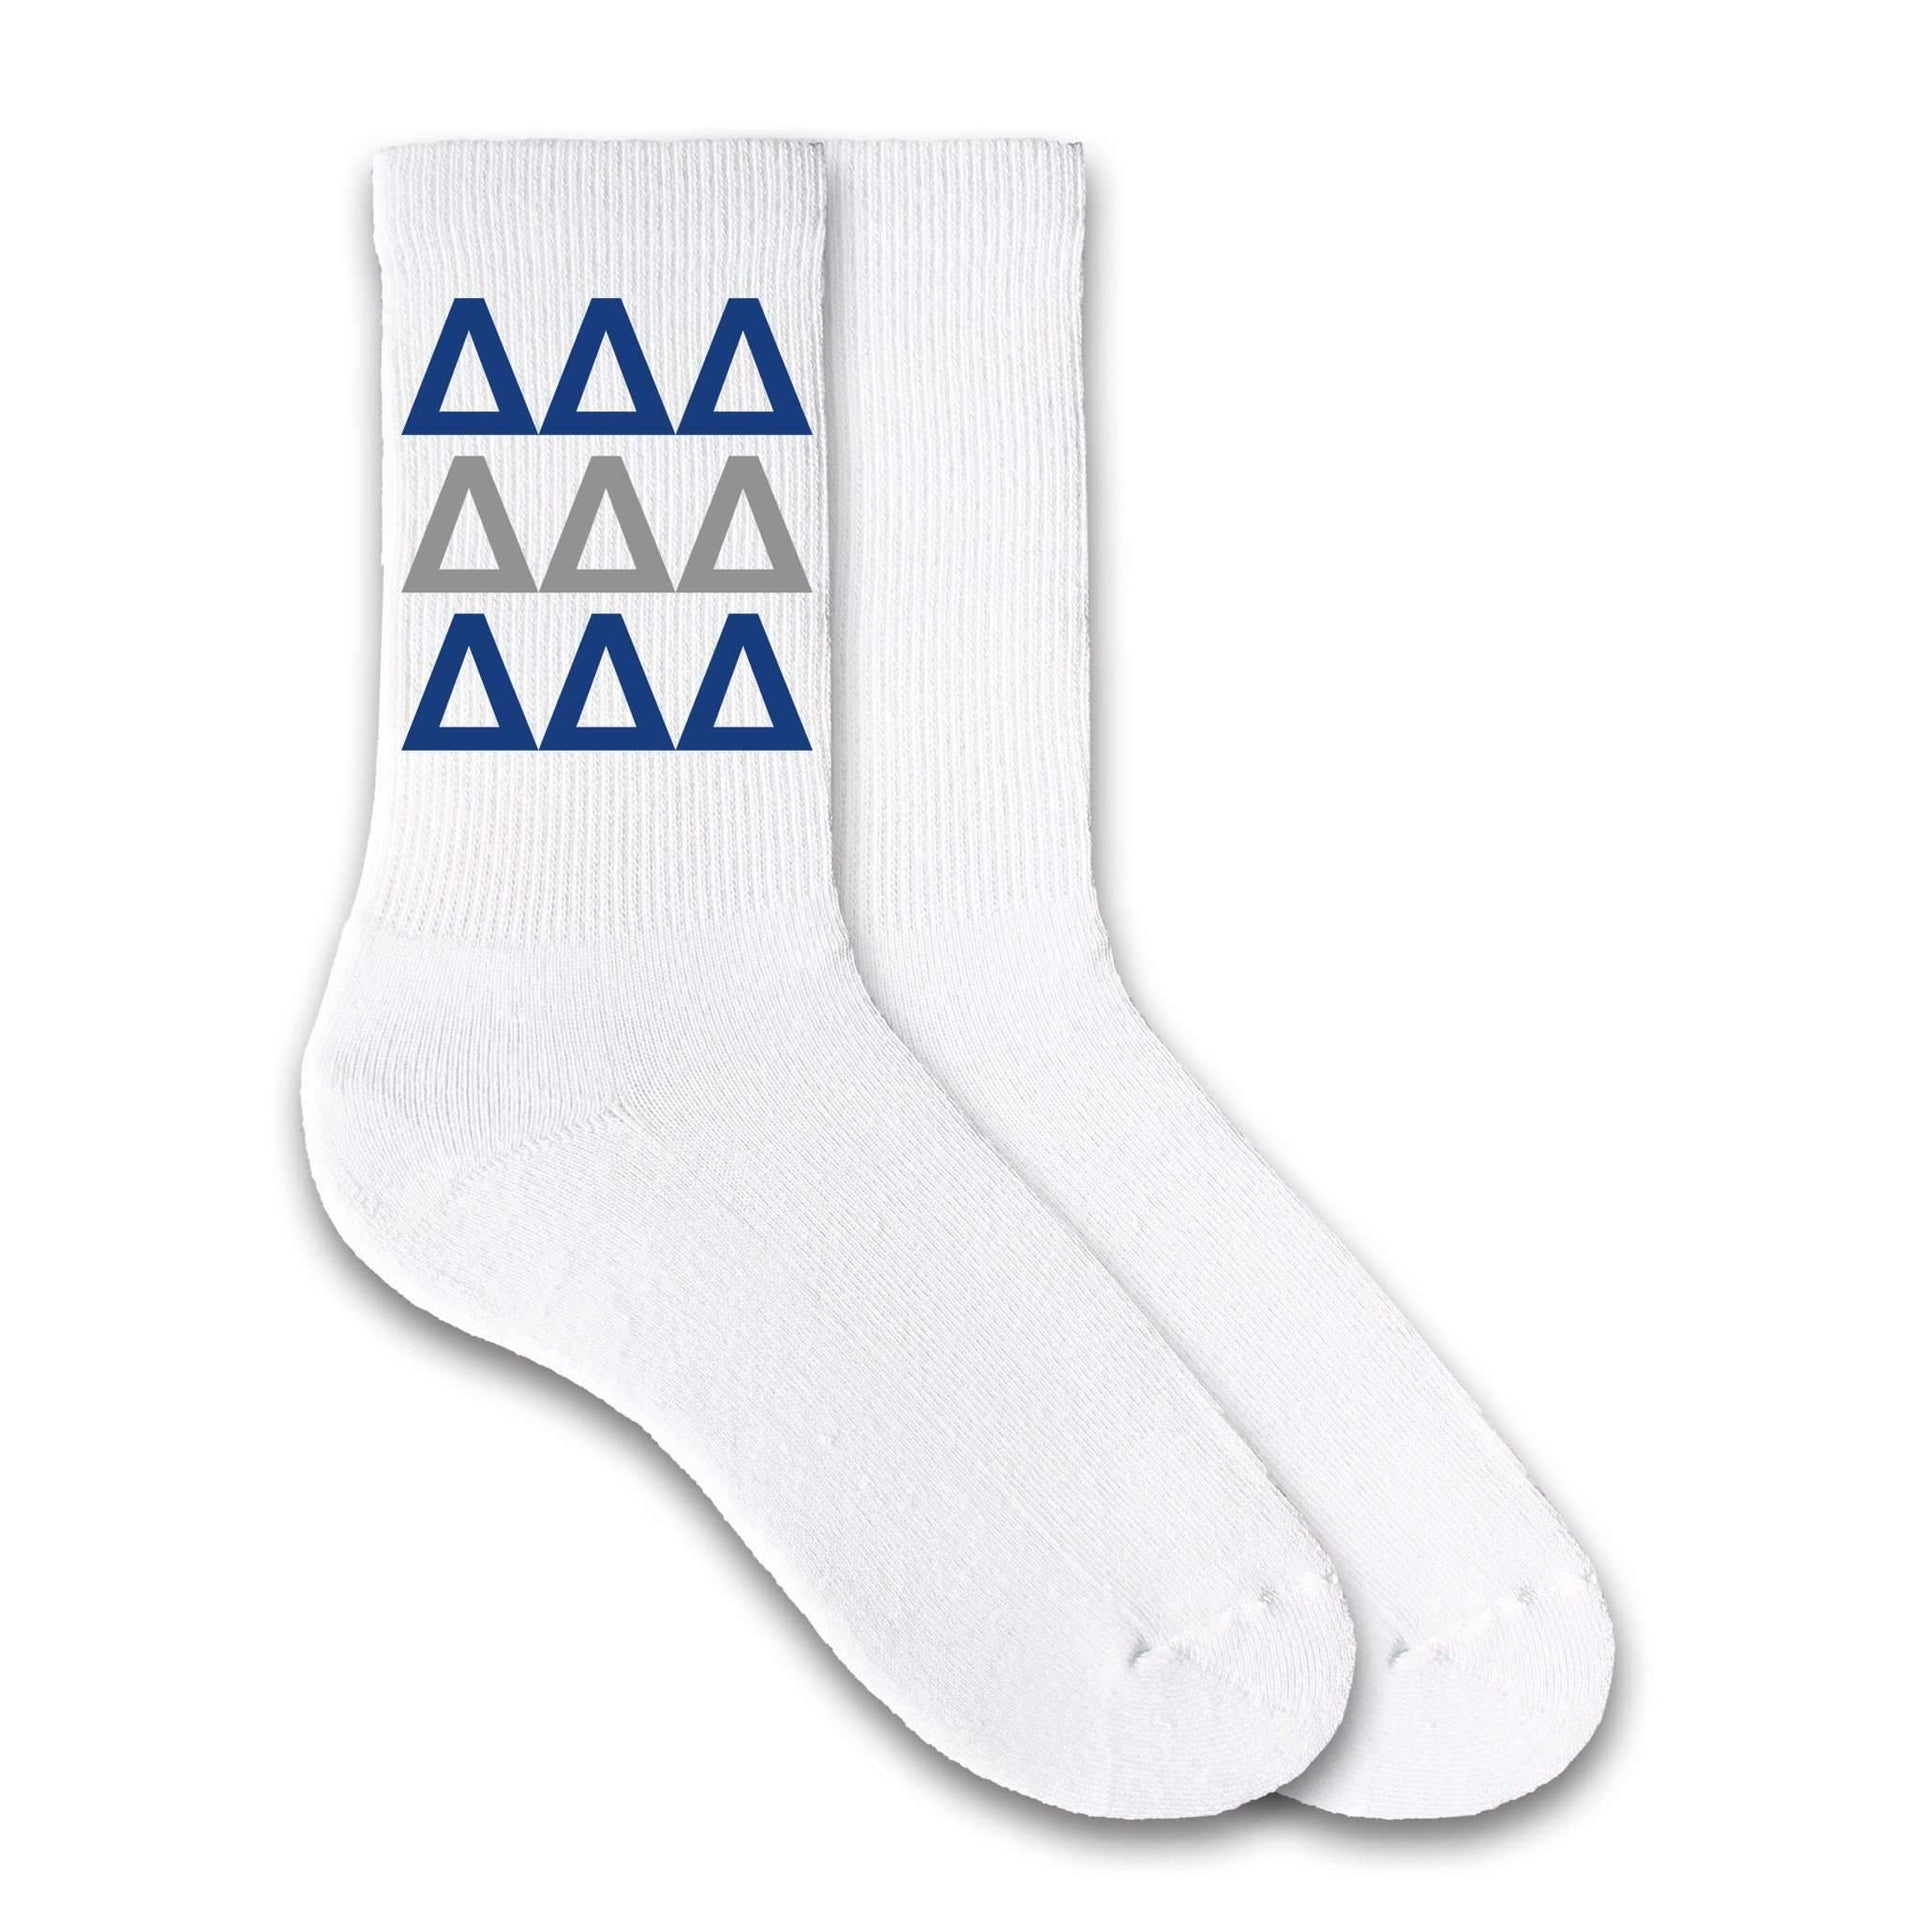 Tri Delta sorority crew socks are perfect for a sorority bid day gift